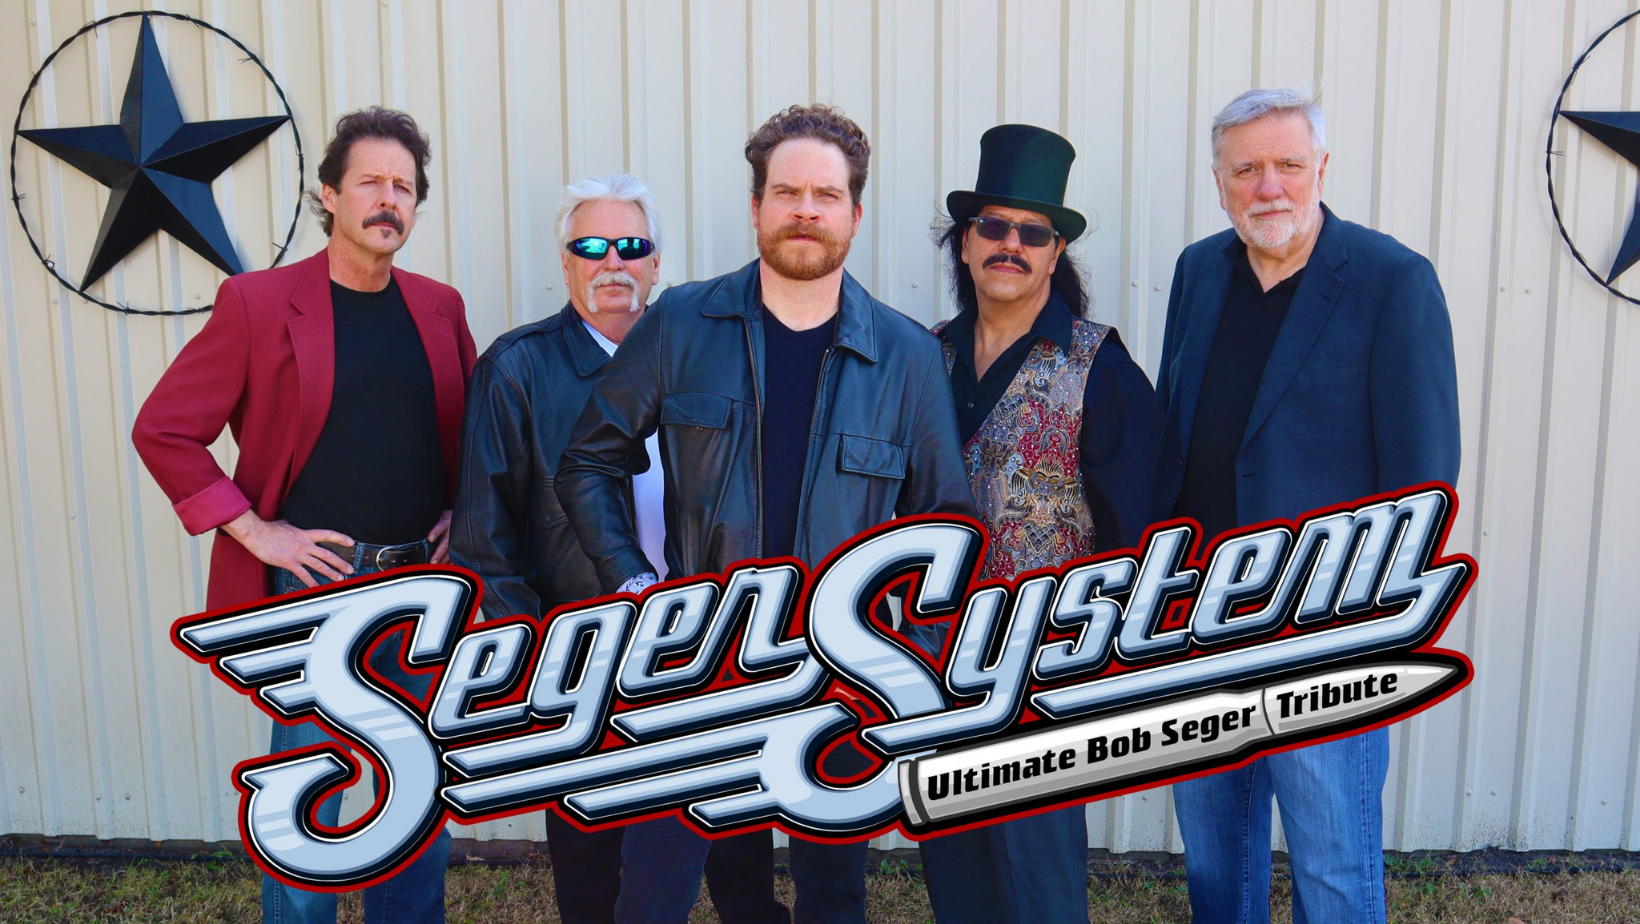 Seger System: Ultimate Bob Seger Tribute - hero